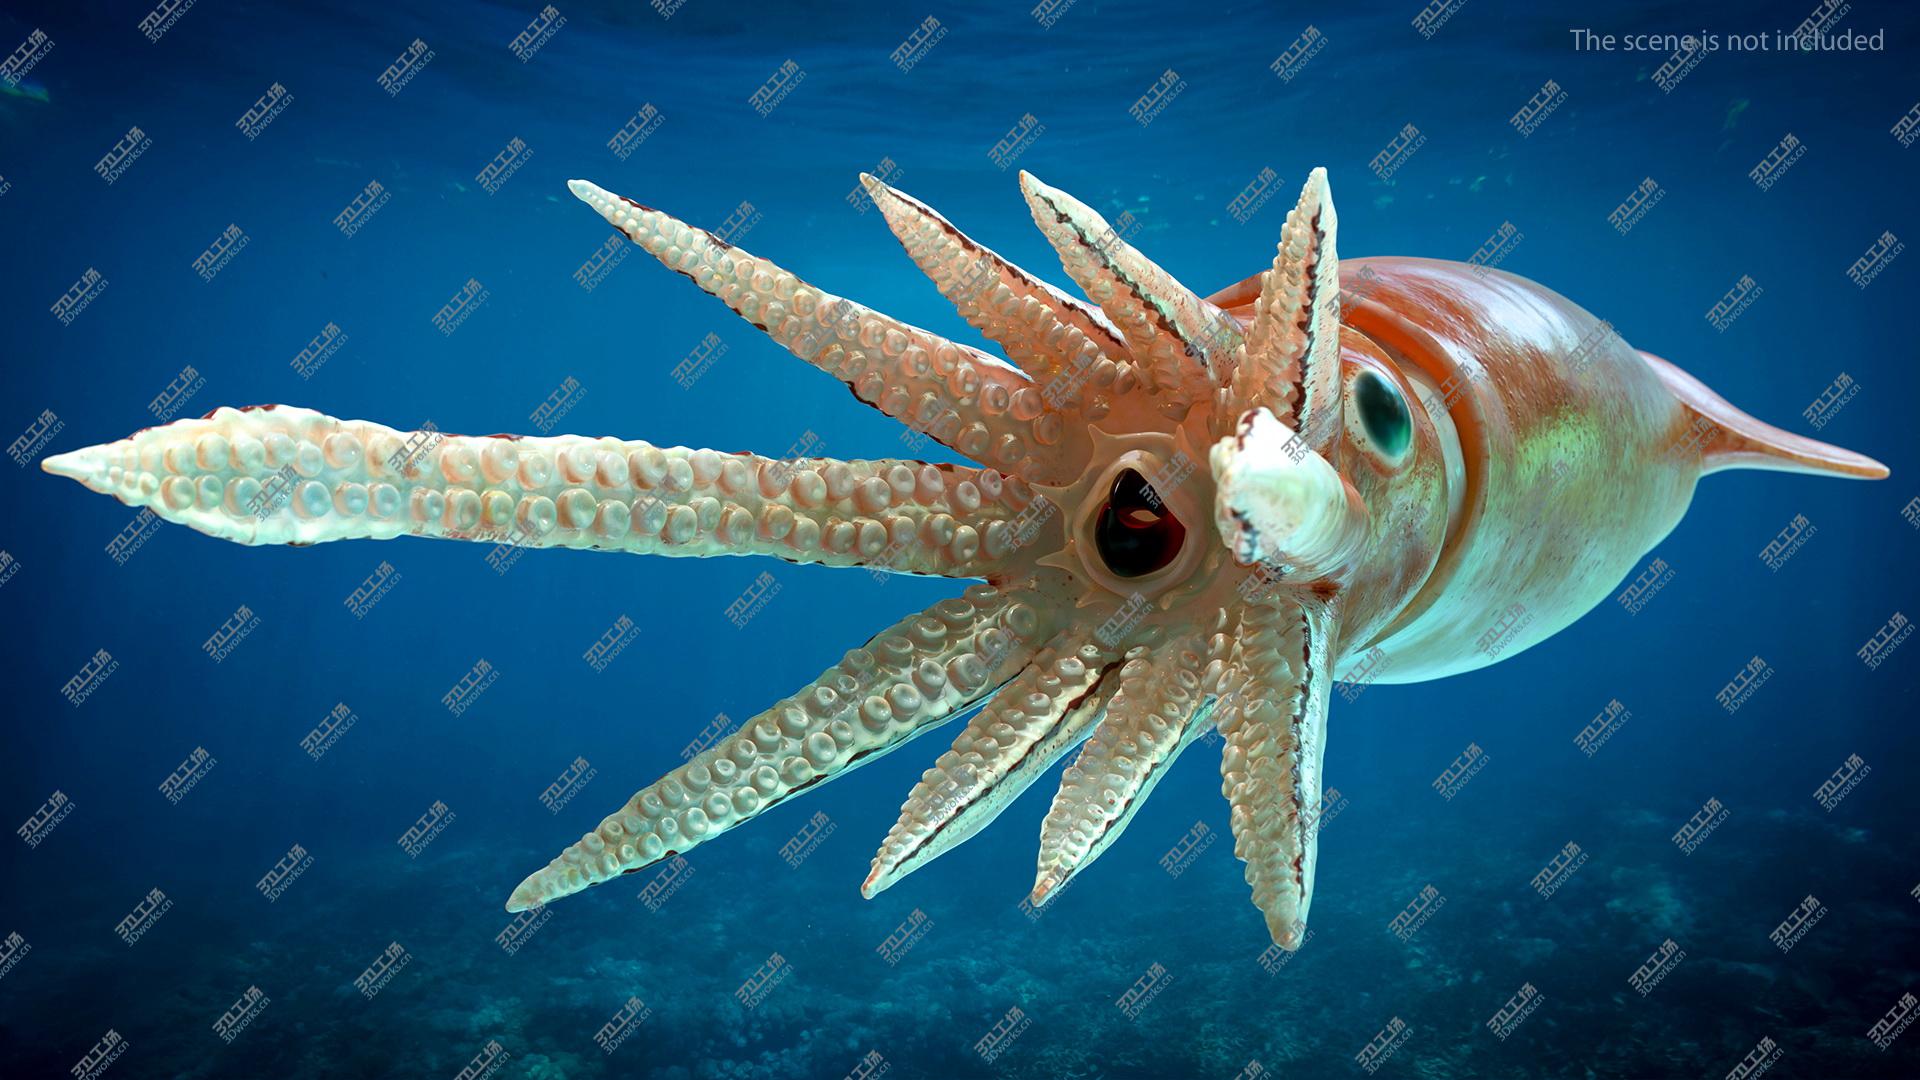 images/goods_img/202105071/Arrow Squid Doryteuthis Plei 3D/5.jpg